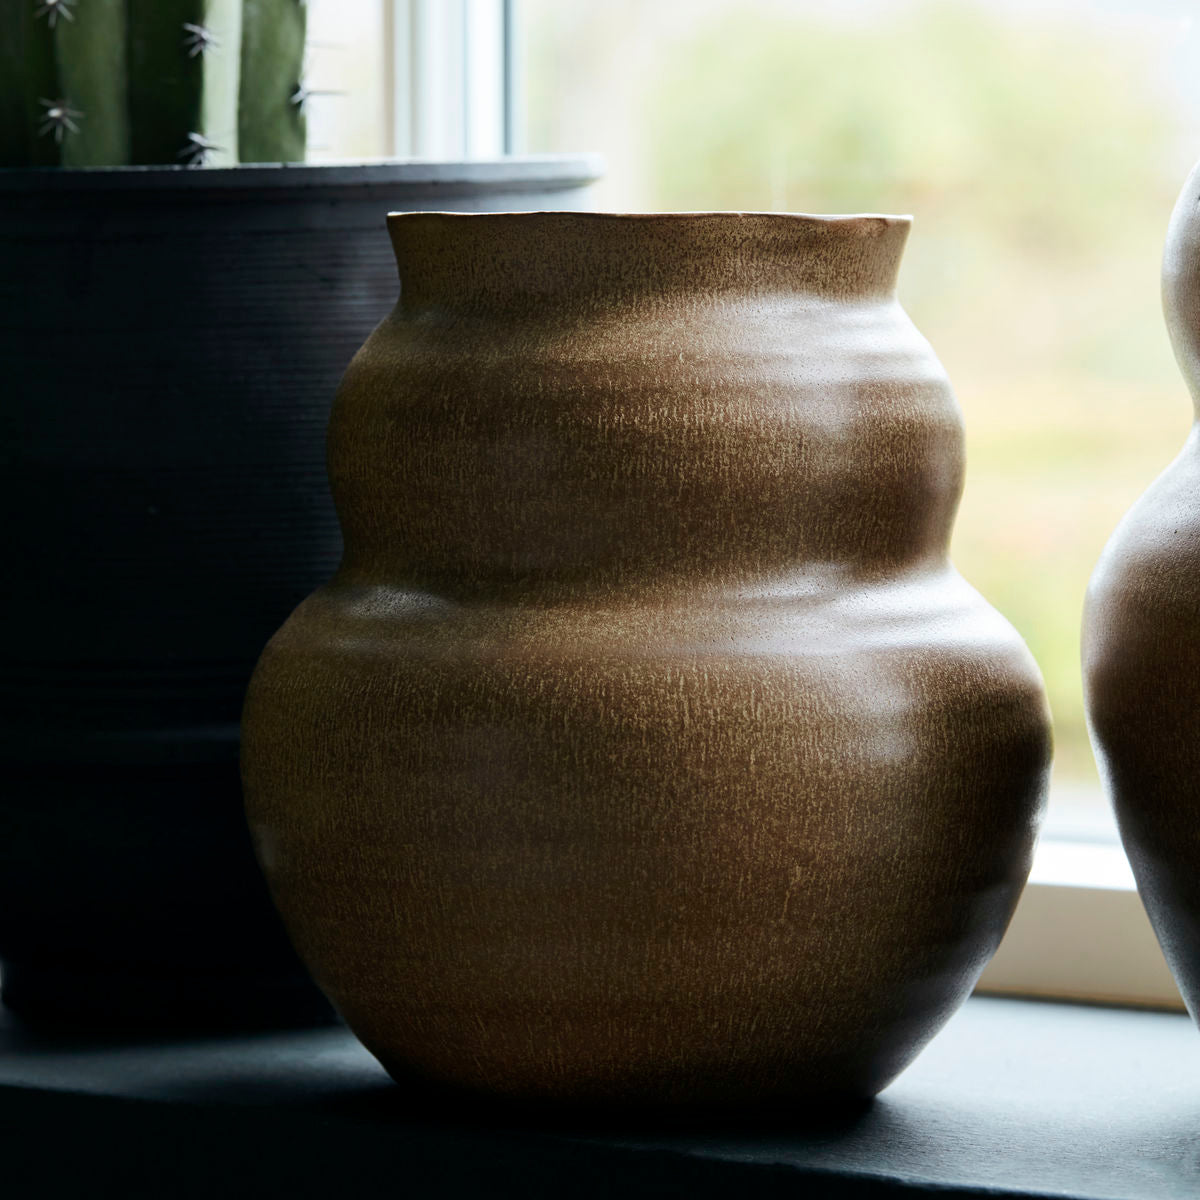 House Doctor-Vase, Juno, Camel-H: 19 cm, DIA: 17 cm